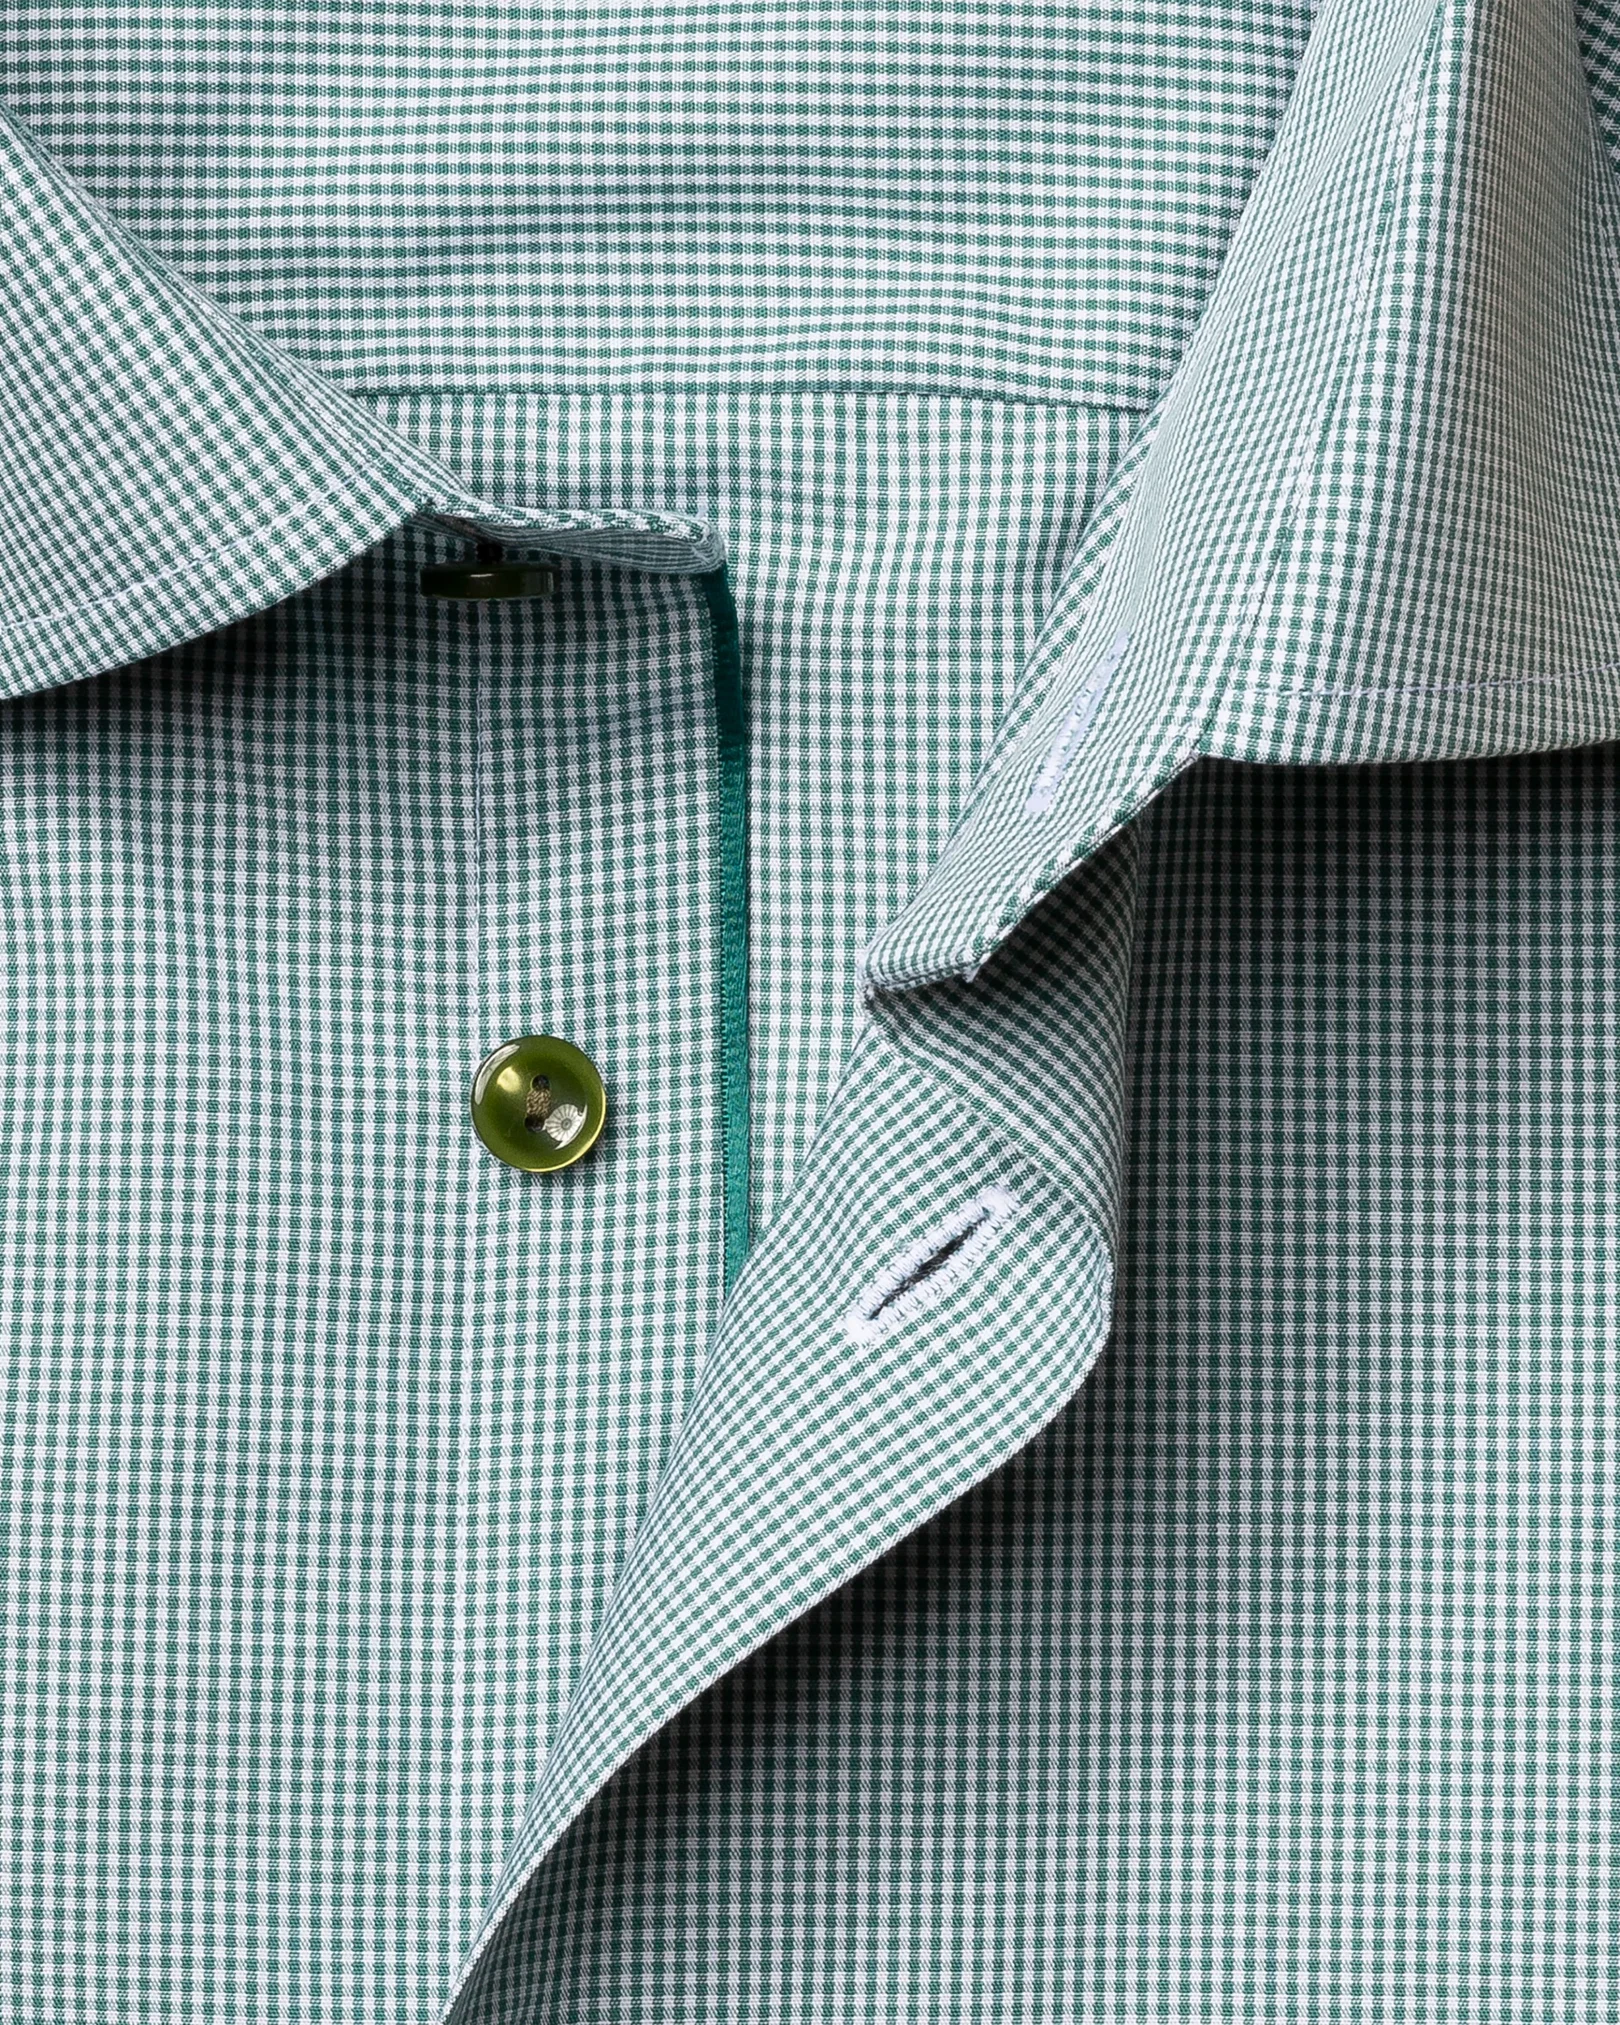 Eton - green gingham poplin shirt cut away